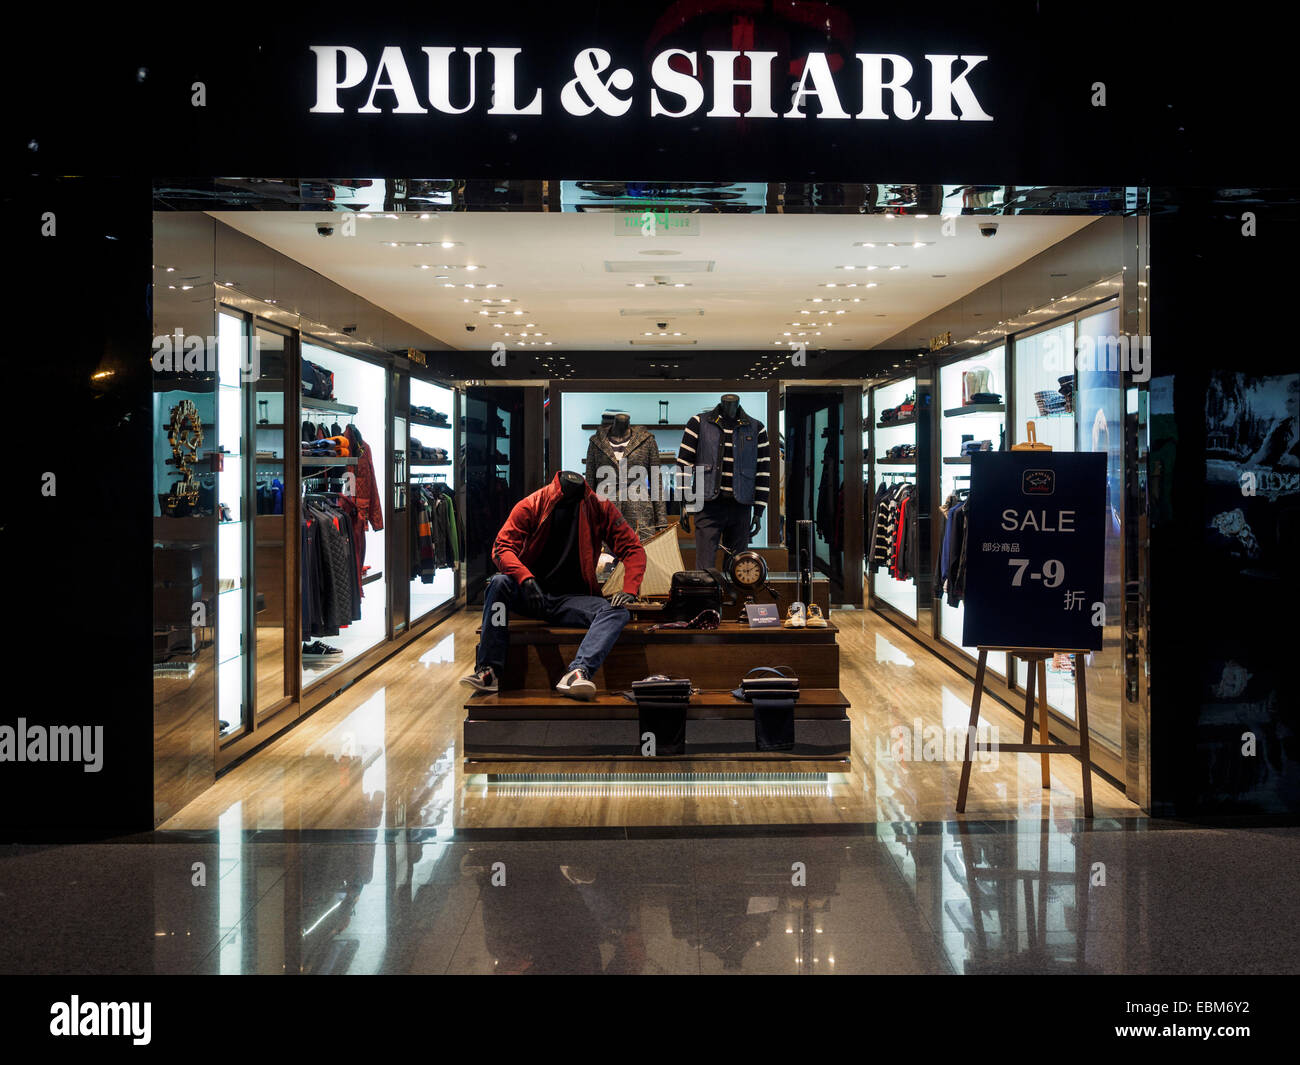 Paul & Shark clothing shop Stock Photo - Alamy